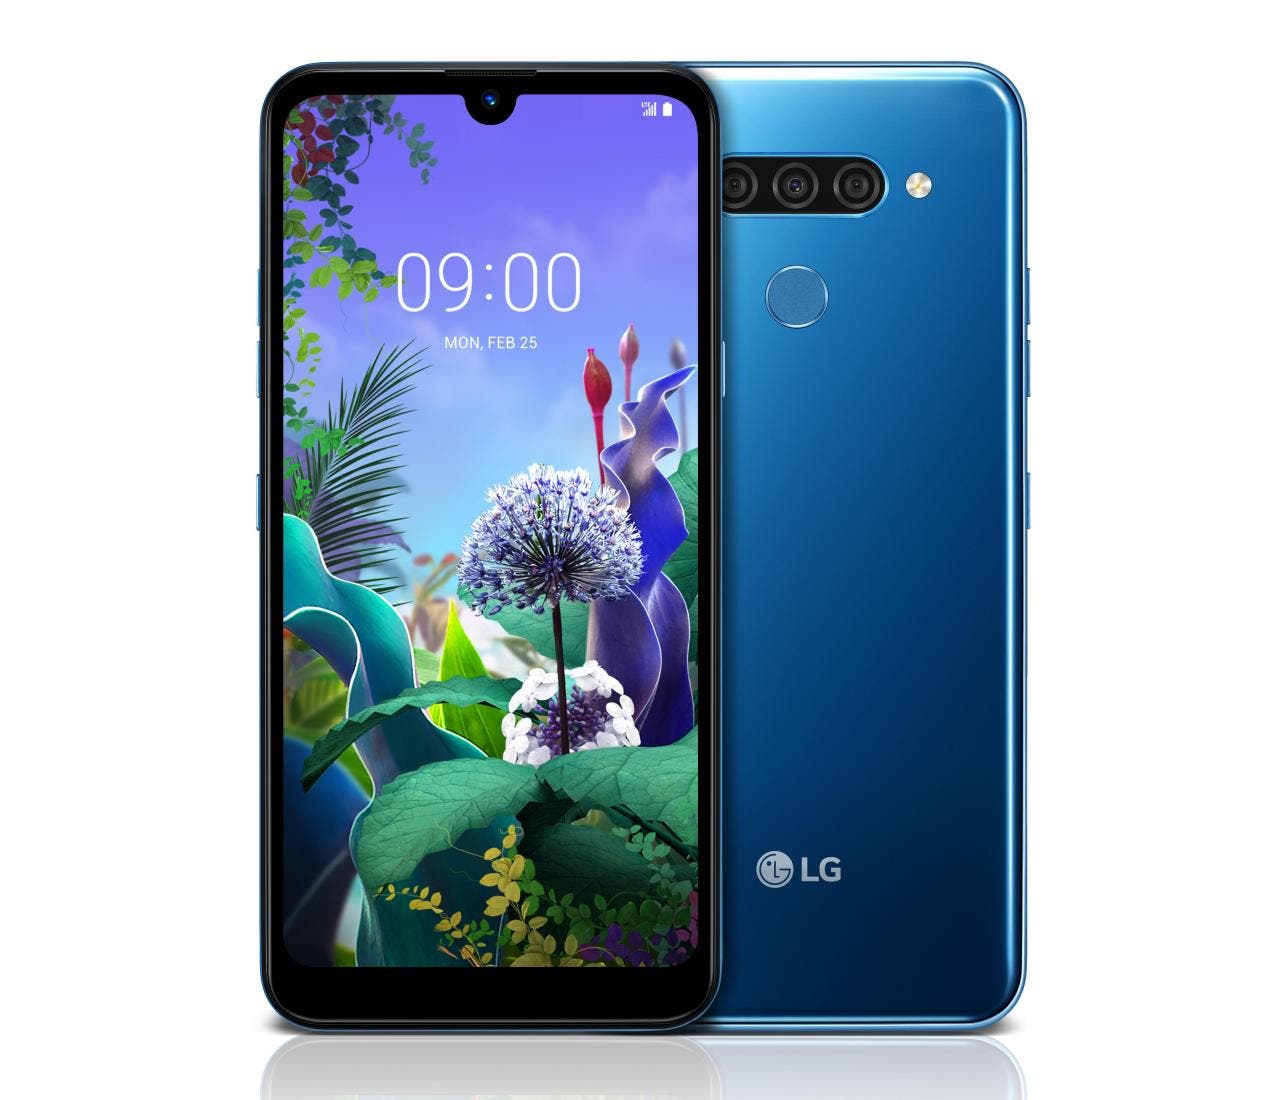 LG unveils three new mid-range phones ahead of Mobile World Congress